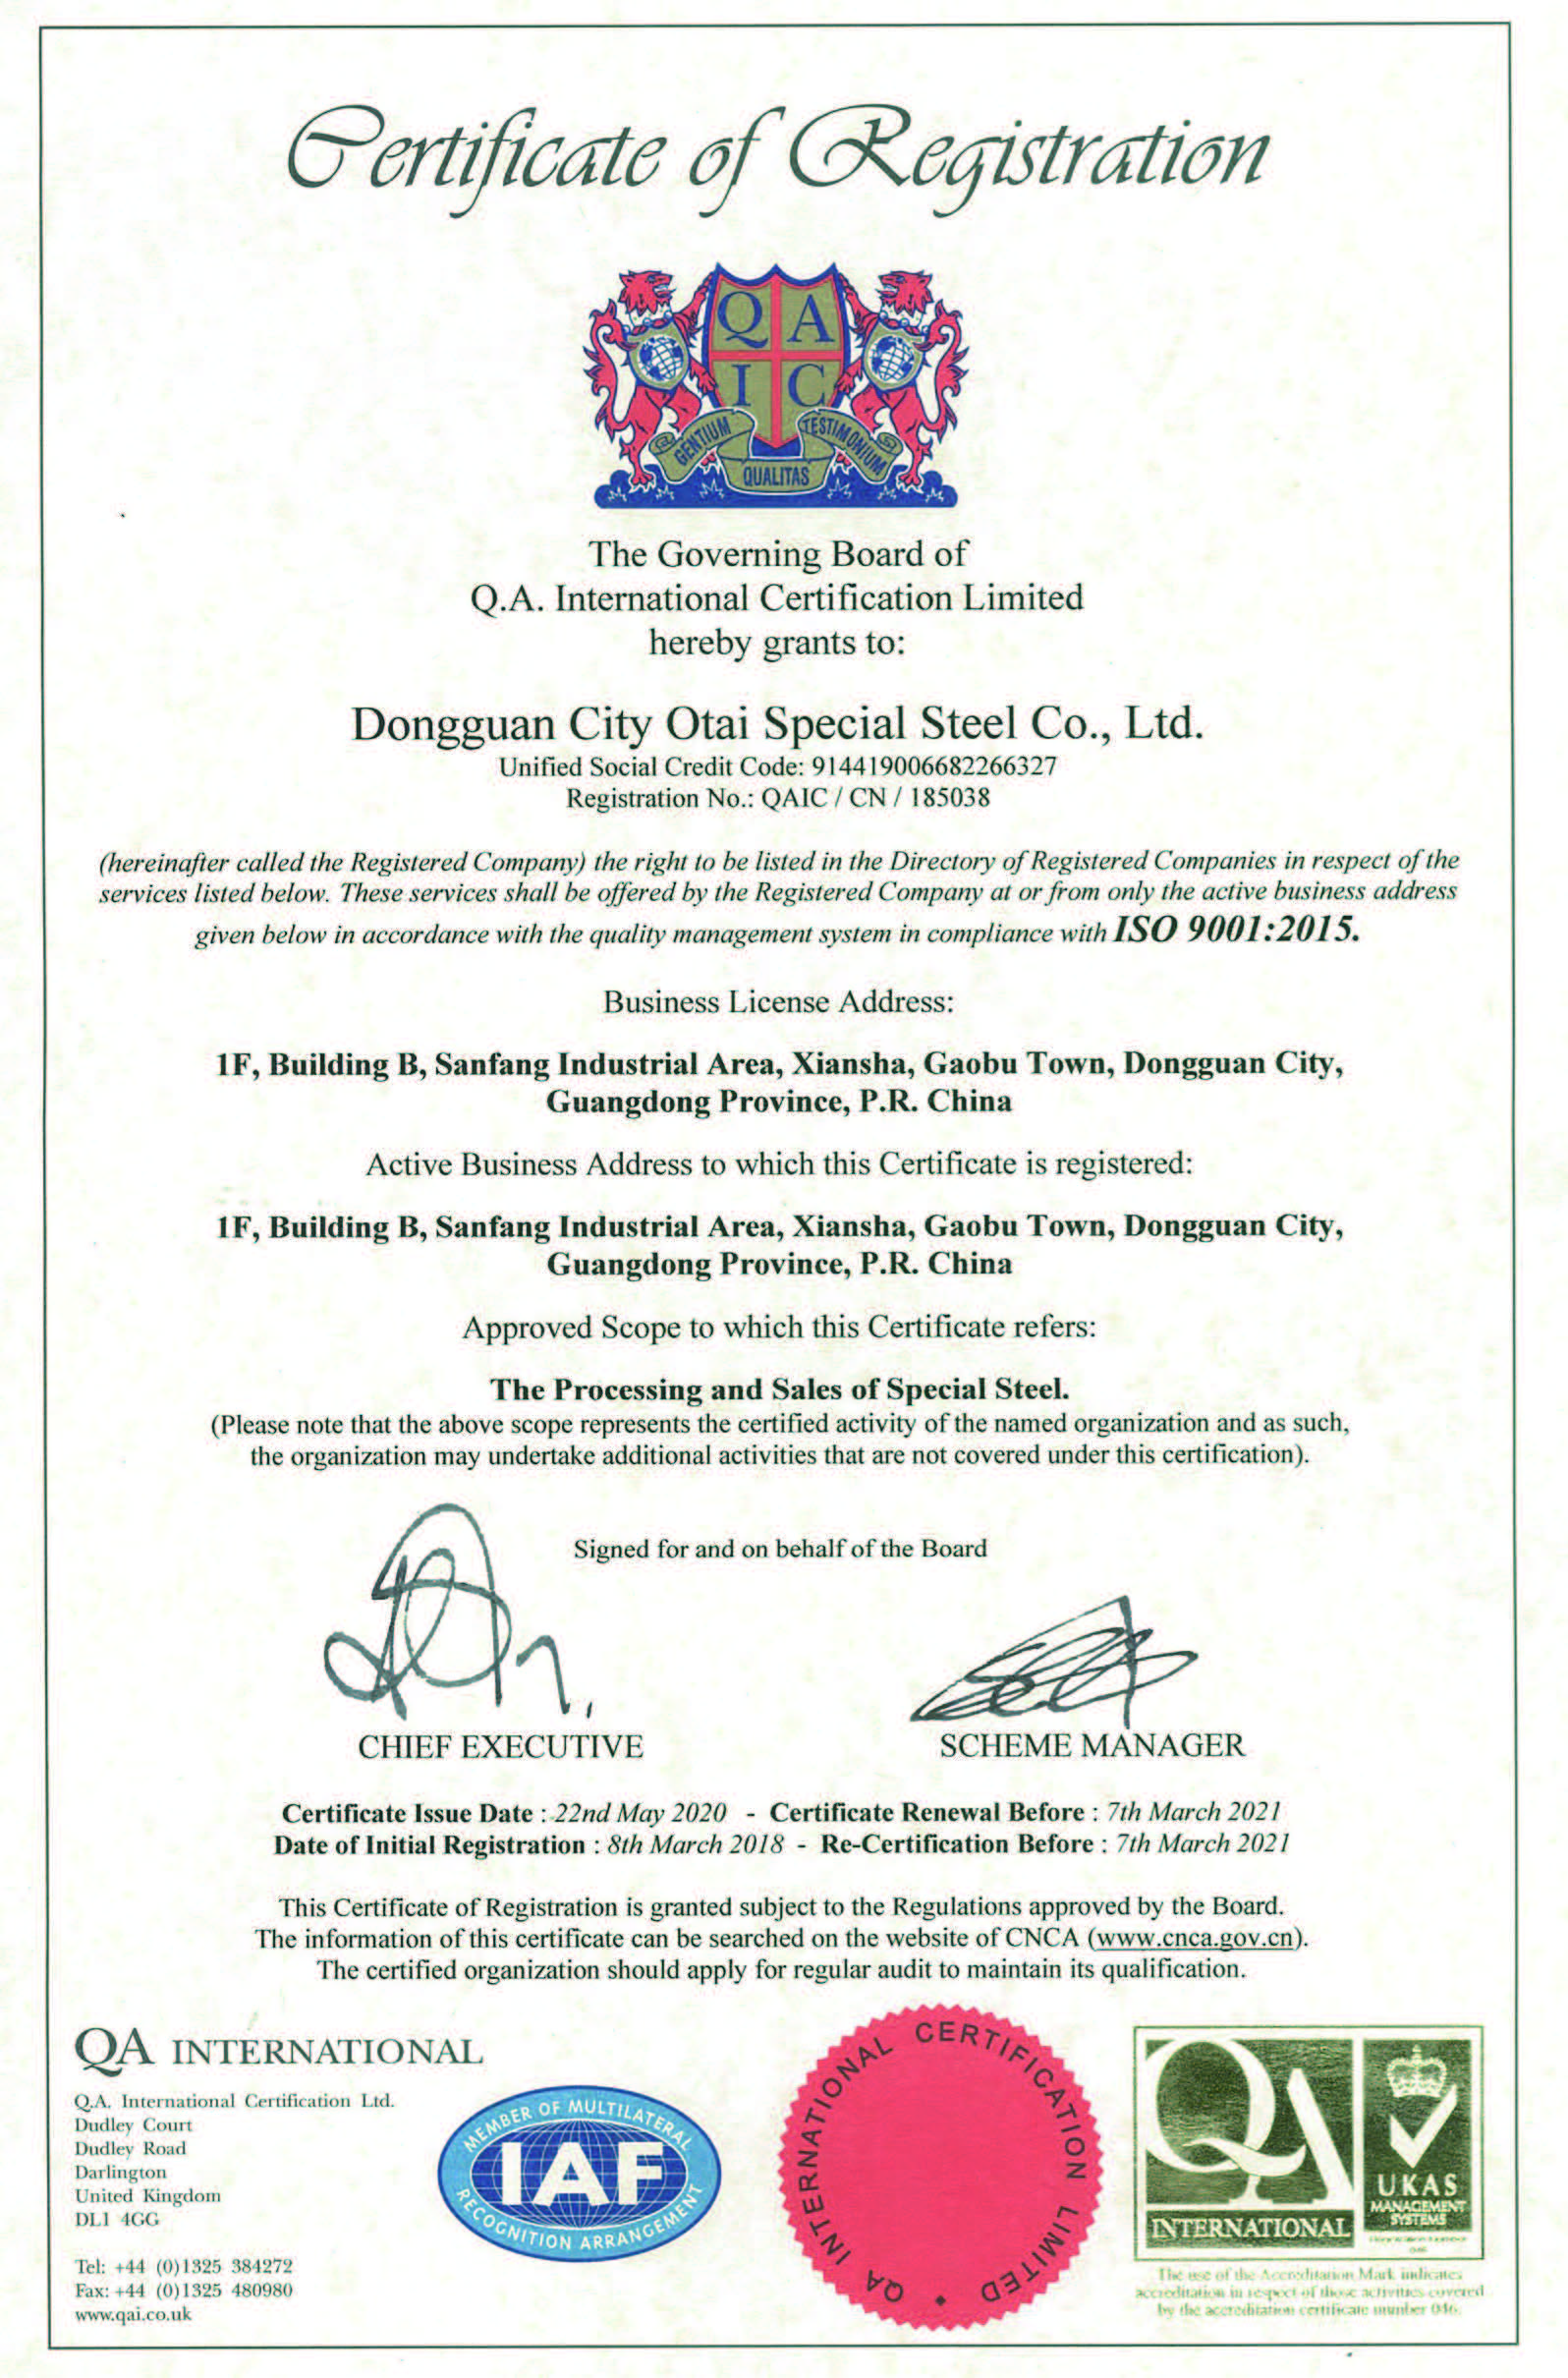 DONGGUAN OTAI SPECIAL STEEL ISO 9001 certificate